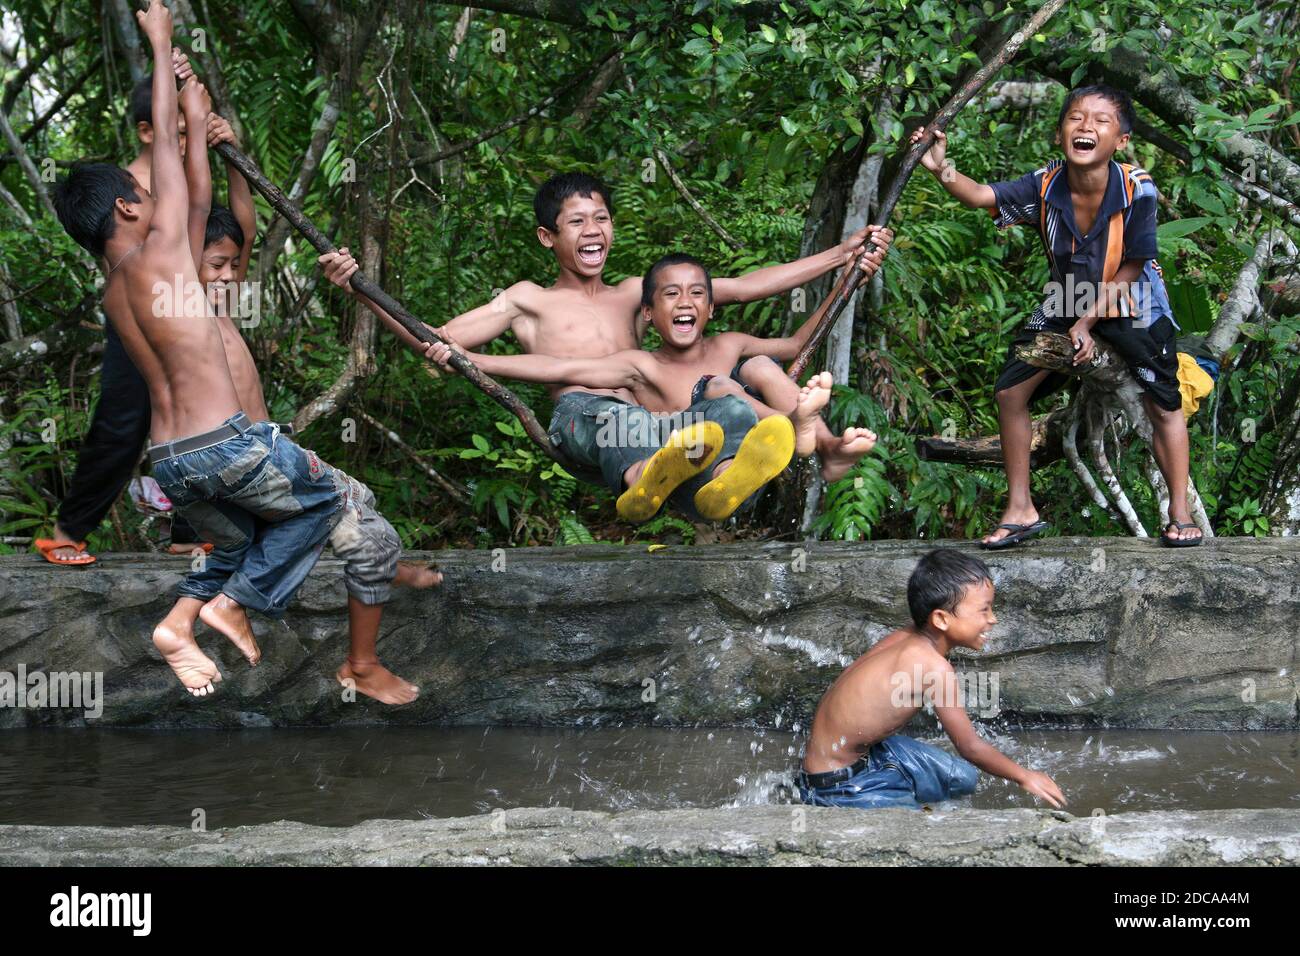 Indonesia Boys swinging on Liana Vine at Rimbo Panti Hot Springs, Sumatra Stock Photo